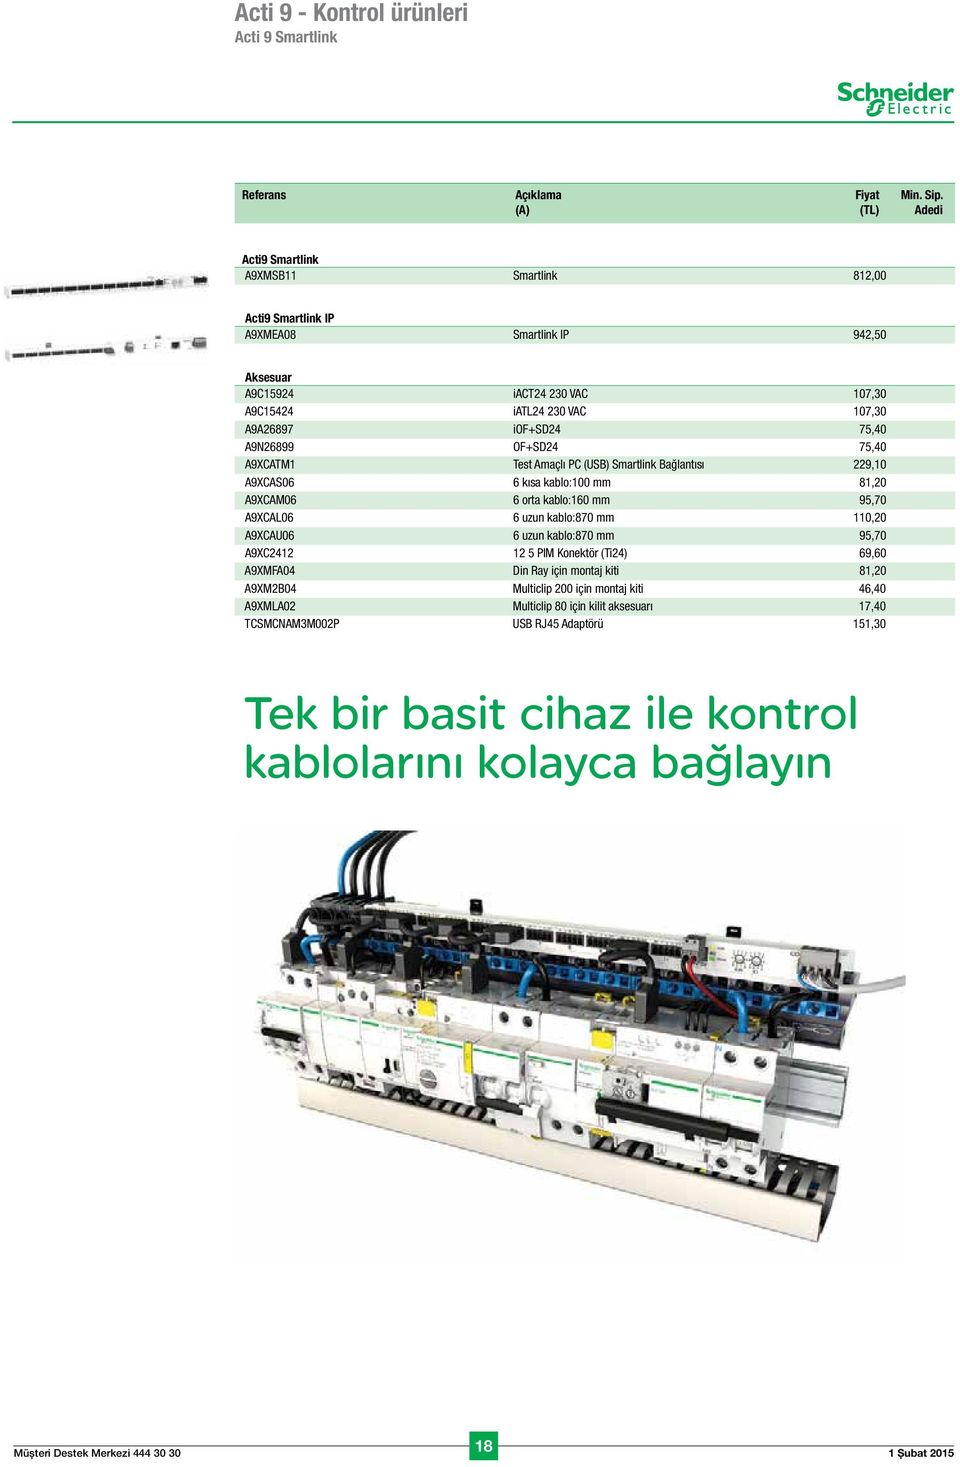 75,40 A9N26899 OF+SD24 75,40 A9XCATM1 Test Amaçlı PC (USB) Smartlink Bağlantısı 229,10 A9XCAS06 6 kısa kablo:100 mm 81,20 A9XCAM06 6 orta kablo:160 mm 95,70 A9XCAL06 6 uzun kablo:870 mm